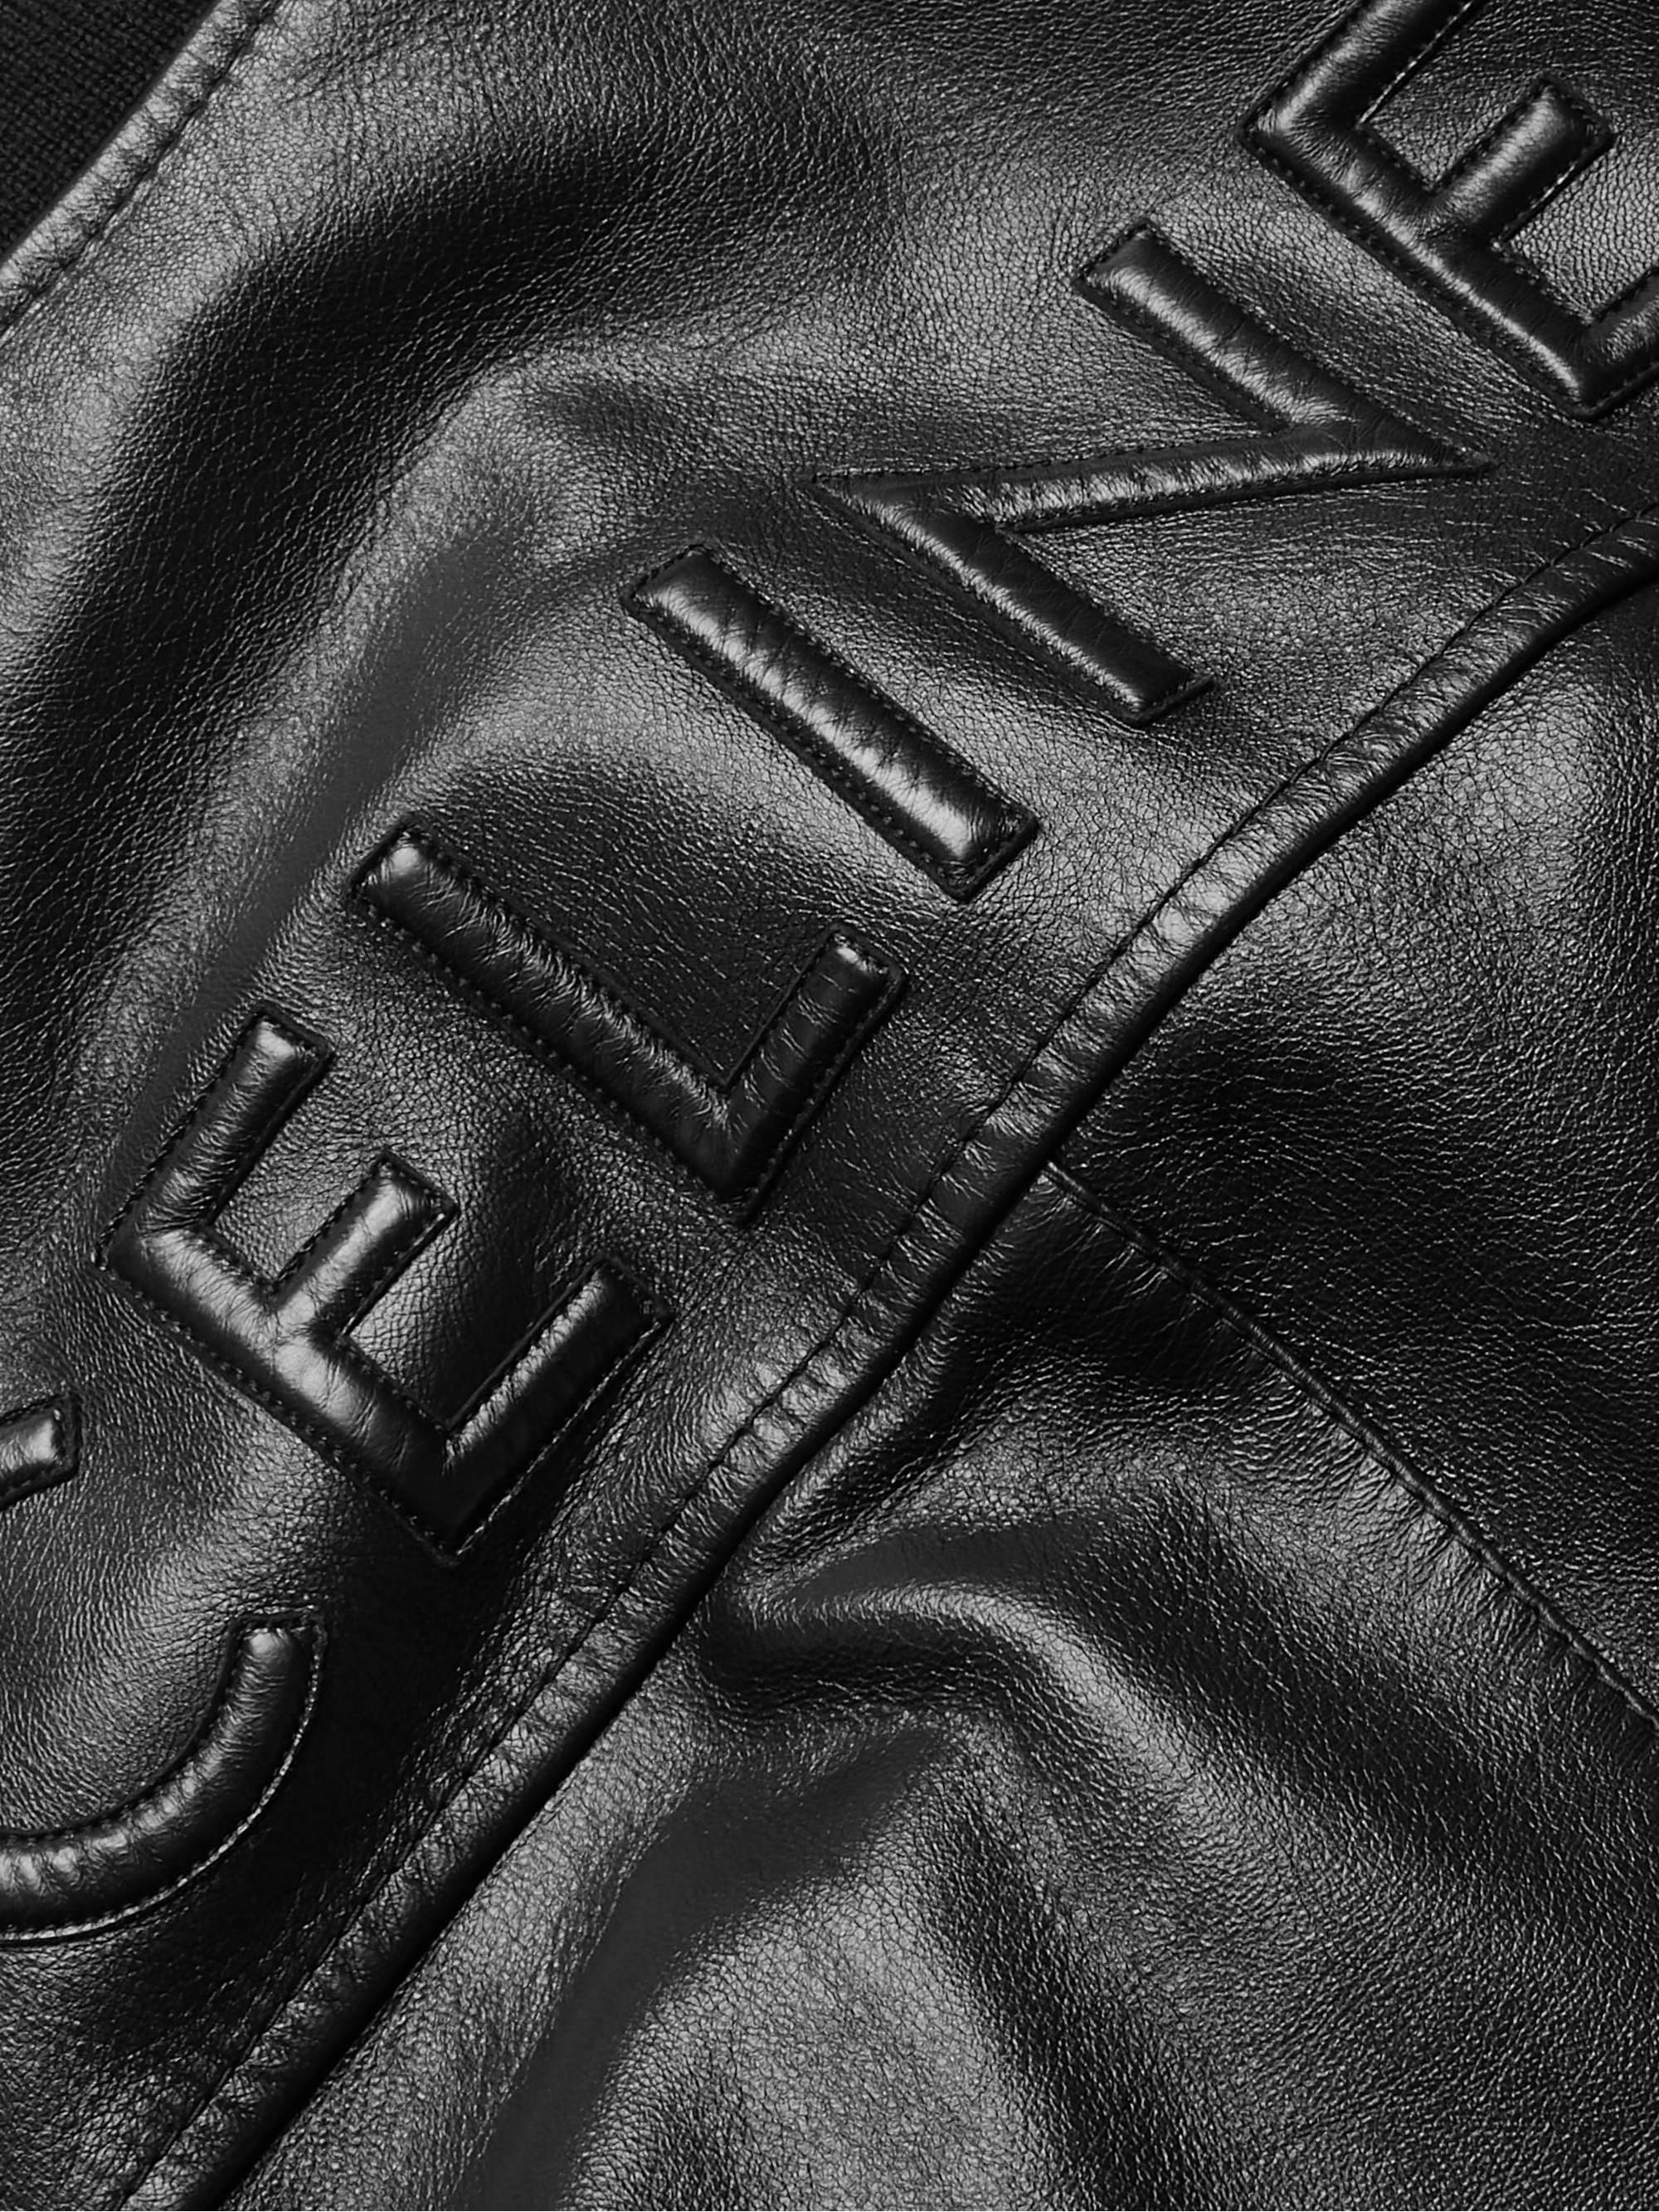 CELINE Logo-Embossed Leather Bomber Jacket